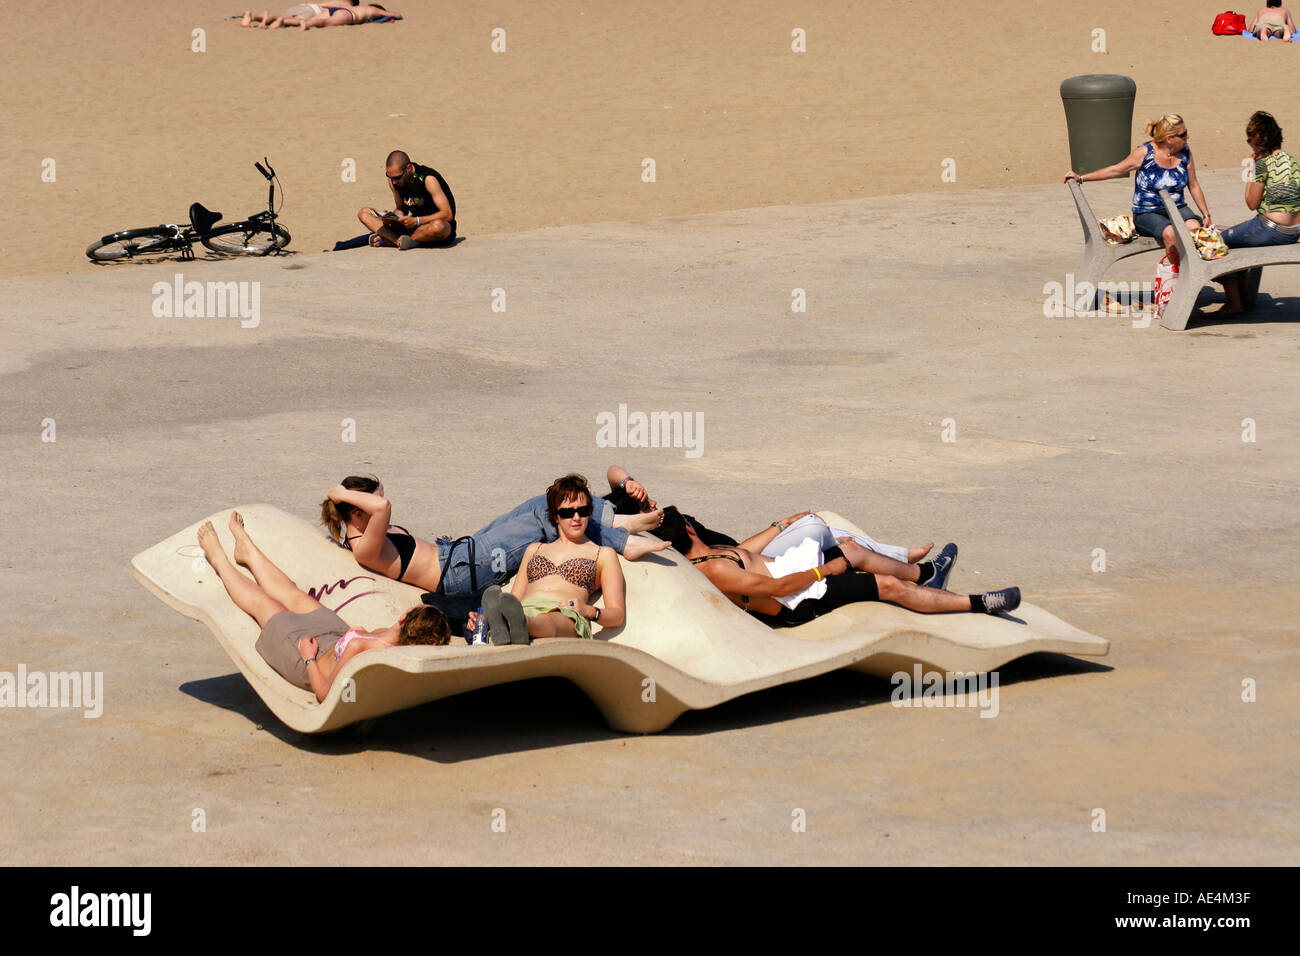 Spain Barcelona beach Platja de la Barceloneta curved seats for sunbathing Stock Photo